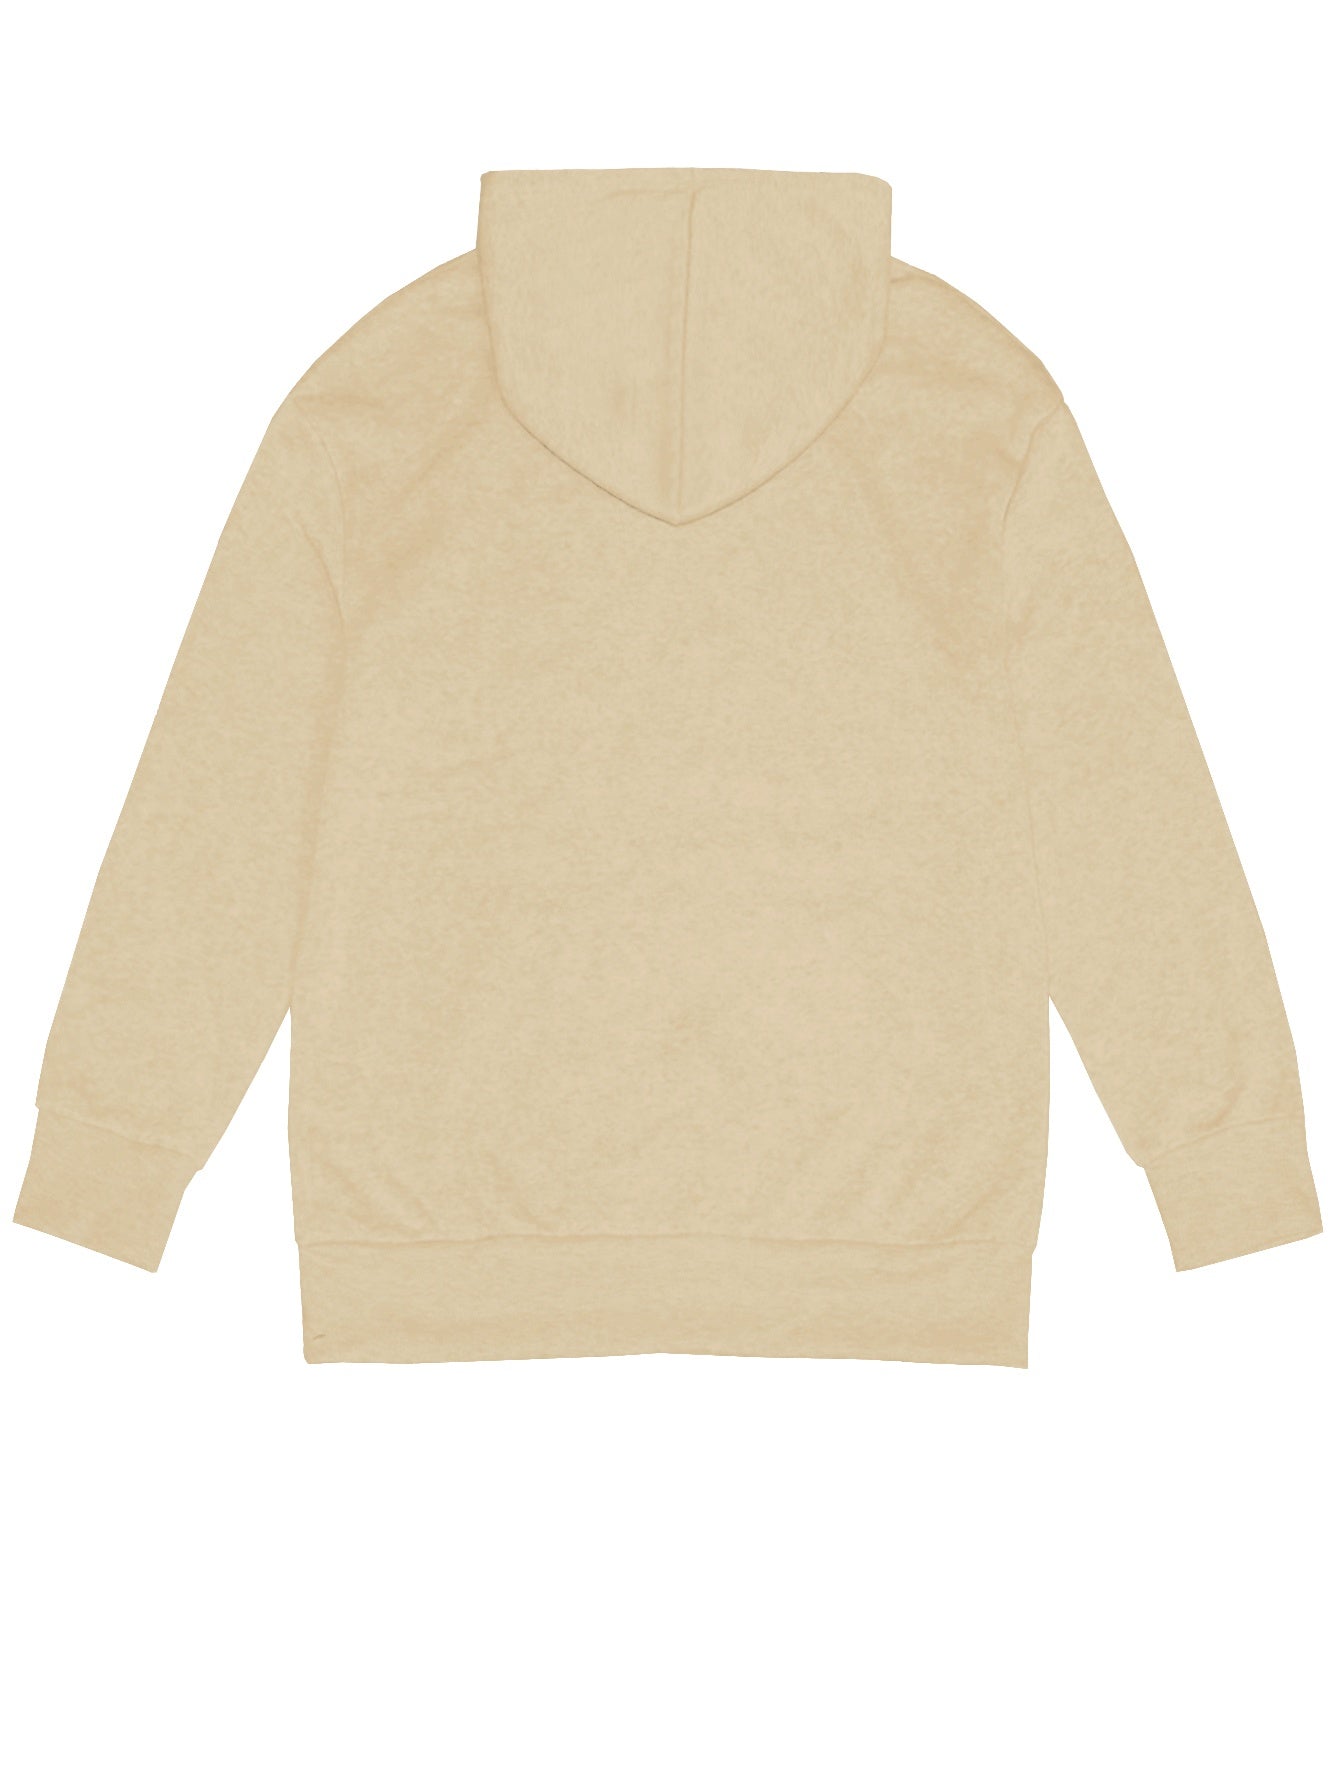 OUR FEELINGS Letter Print Pattern Men's Creative Hooded Sweatshirt For Spring Fall Winter, Trendy Clothing For Men